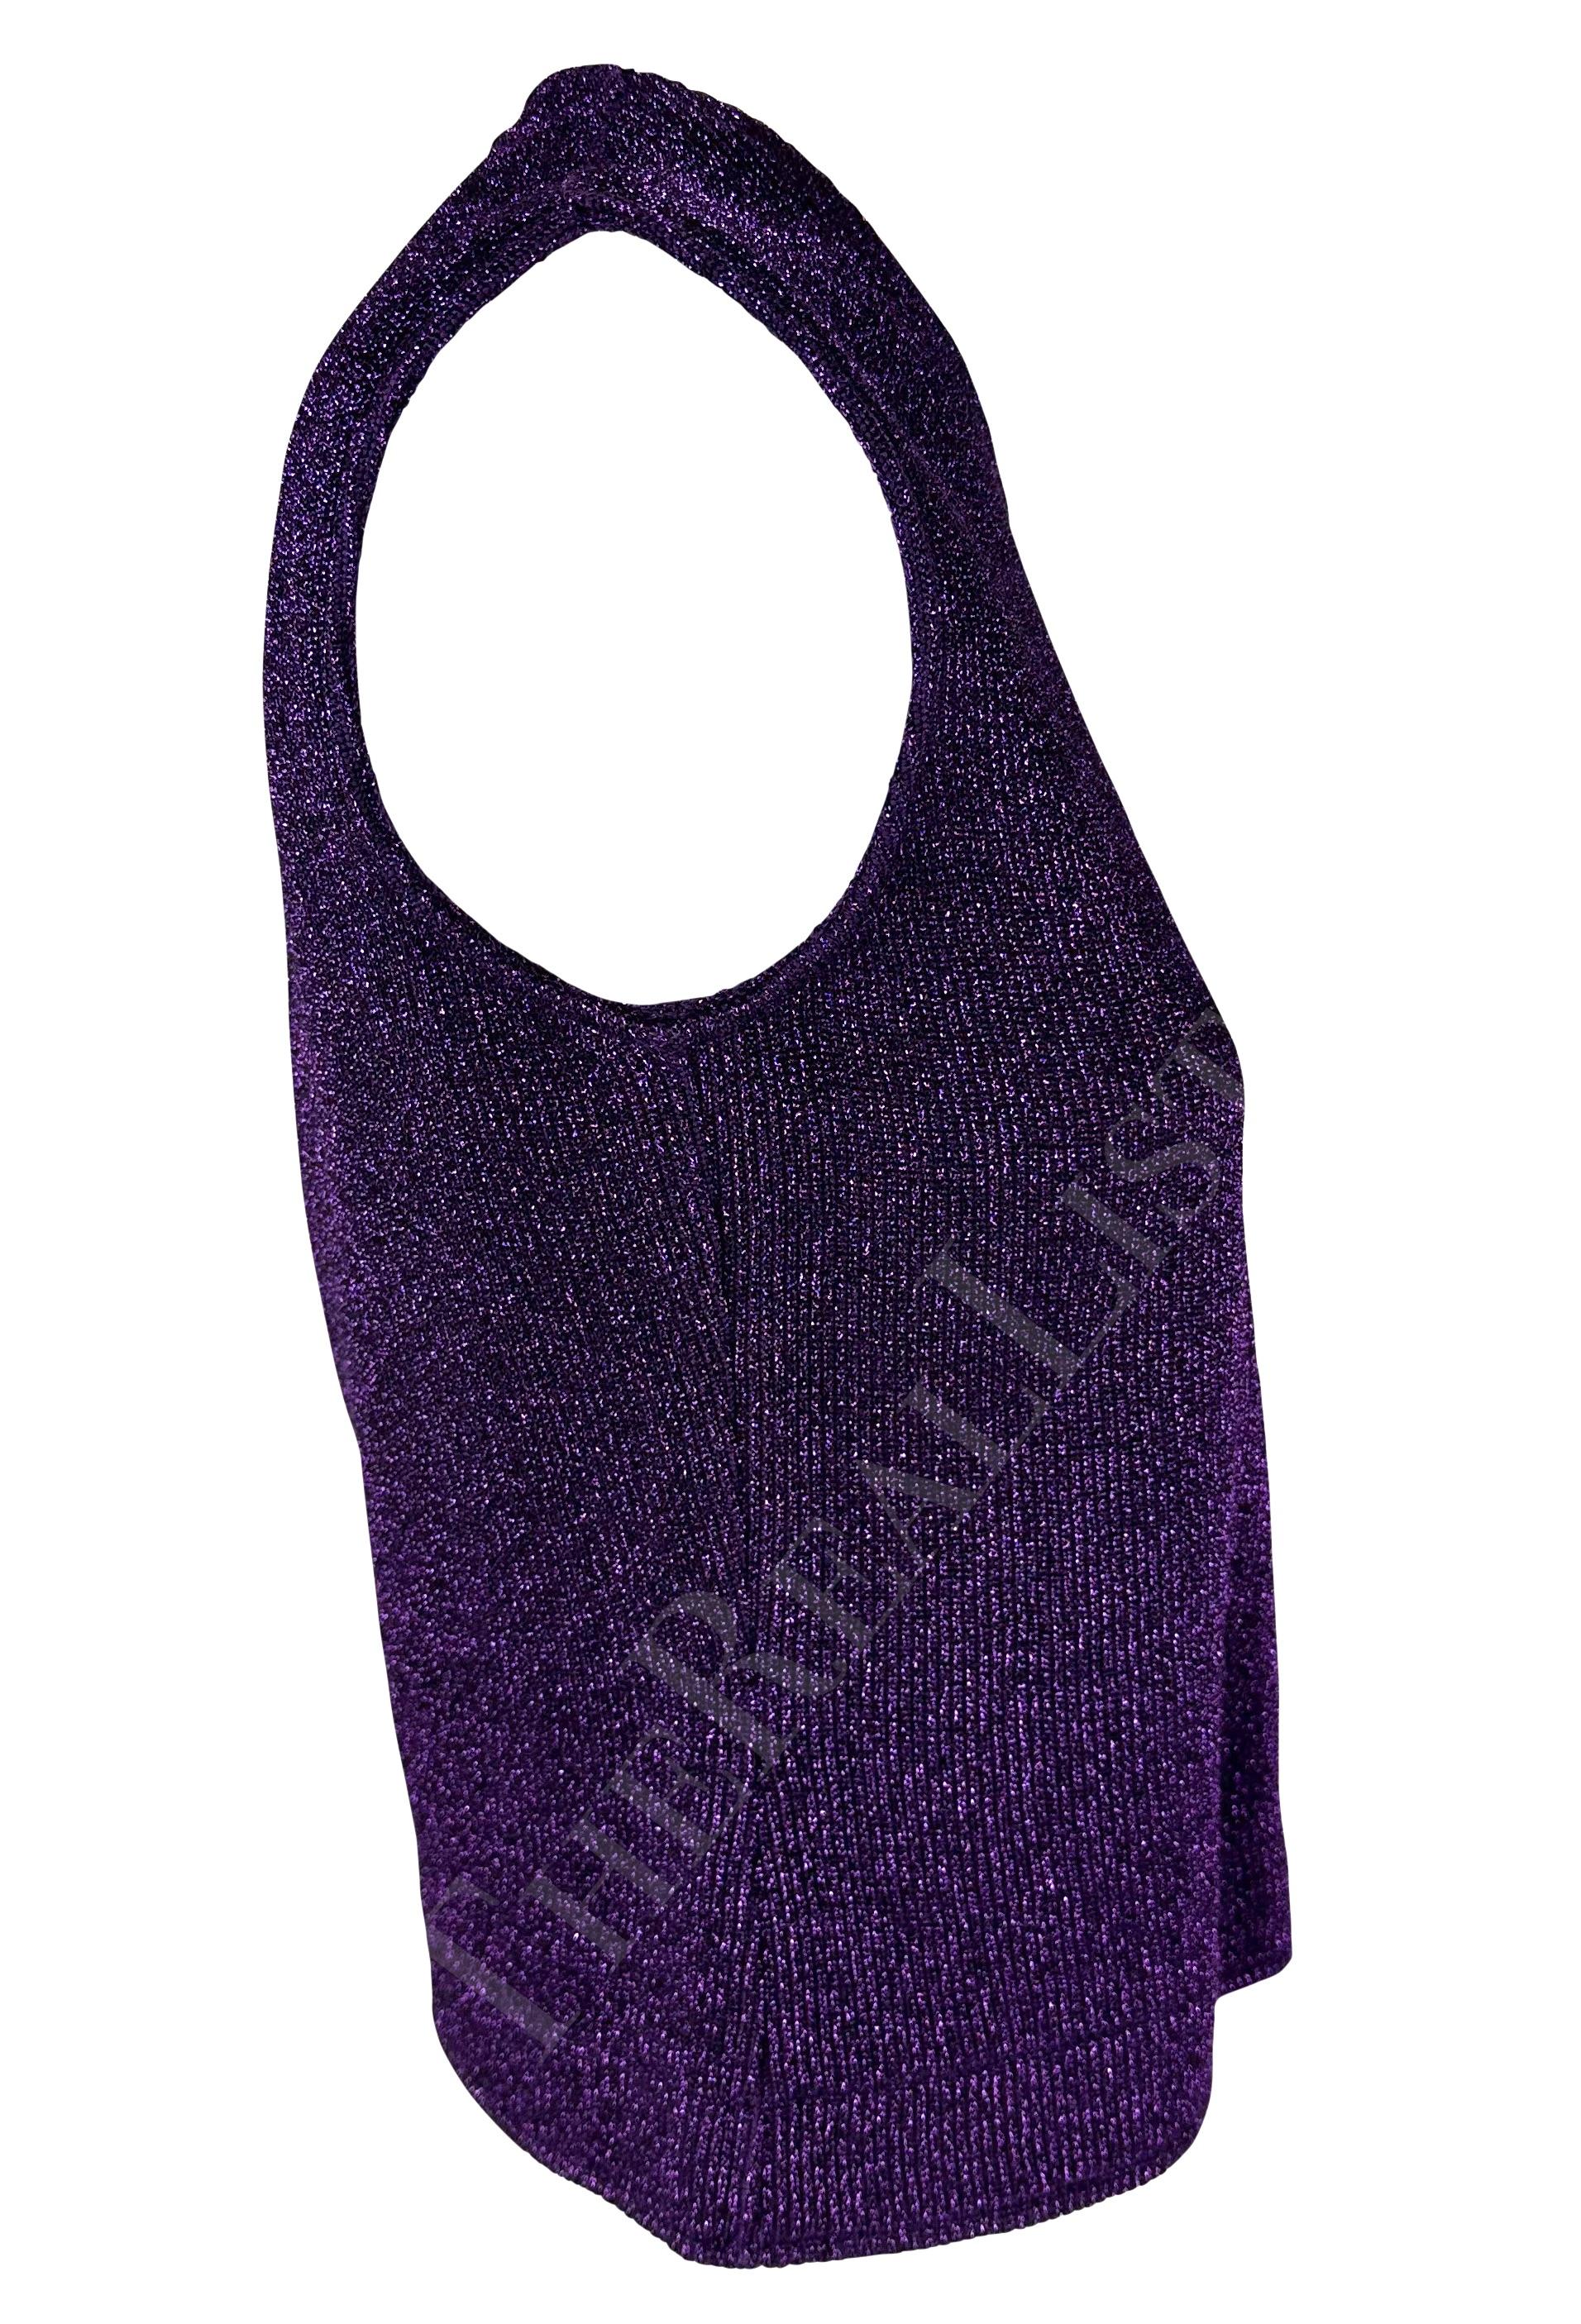 F/W 1996 Salvatore Ferragamo Purple Metallic Knit Sleeveless Top For Sale 3